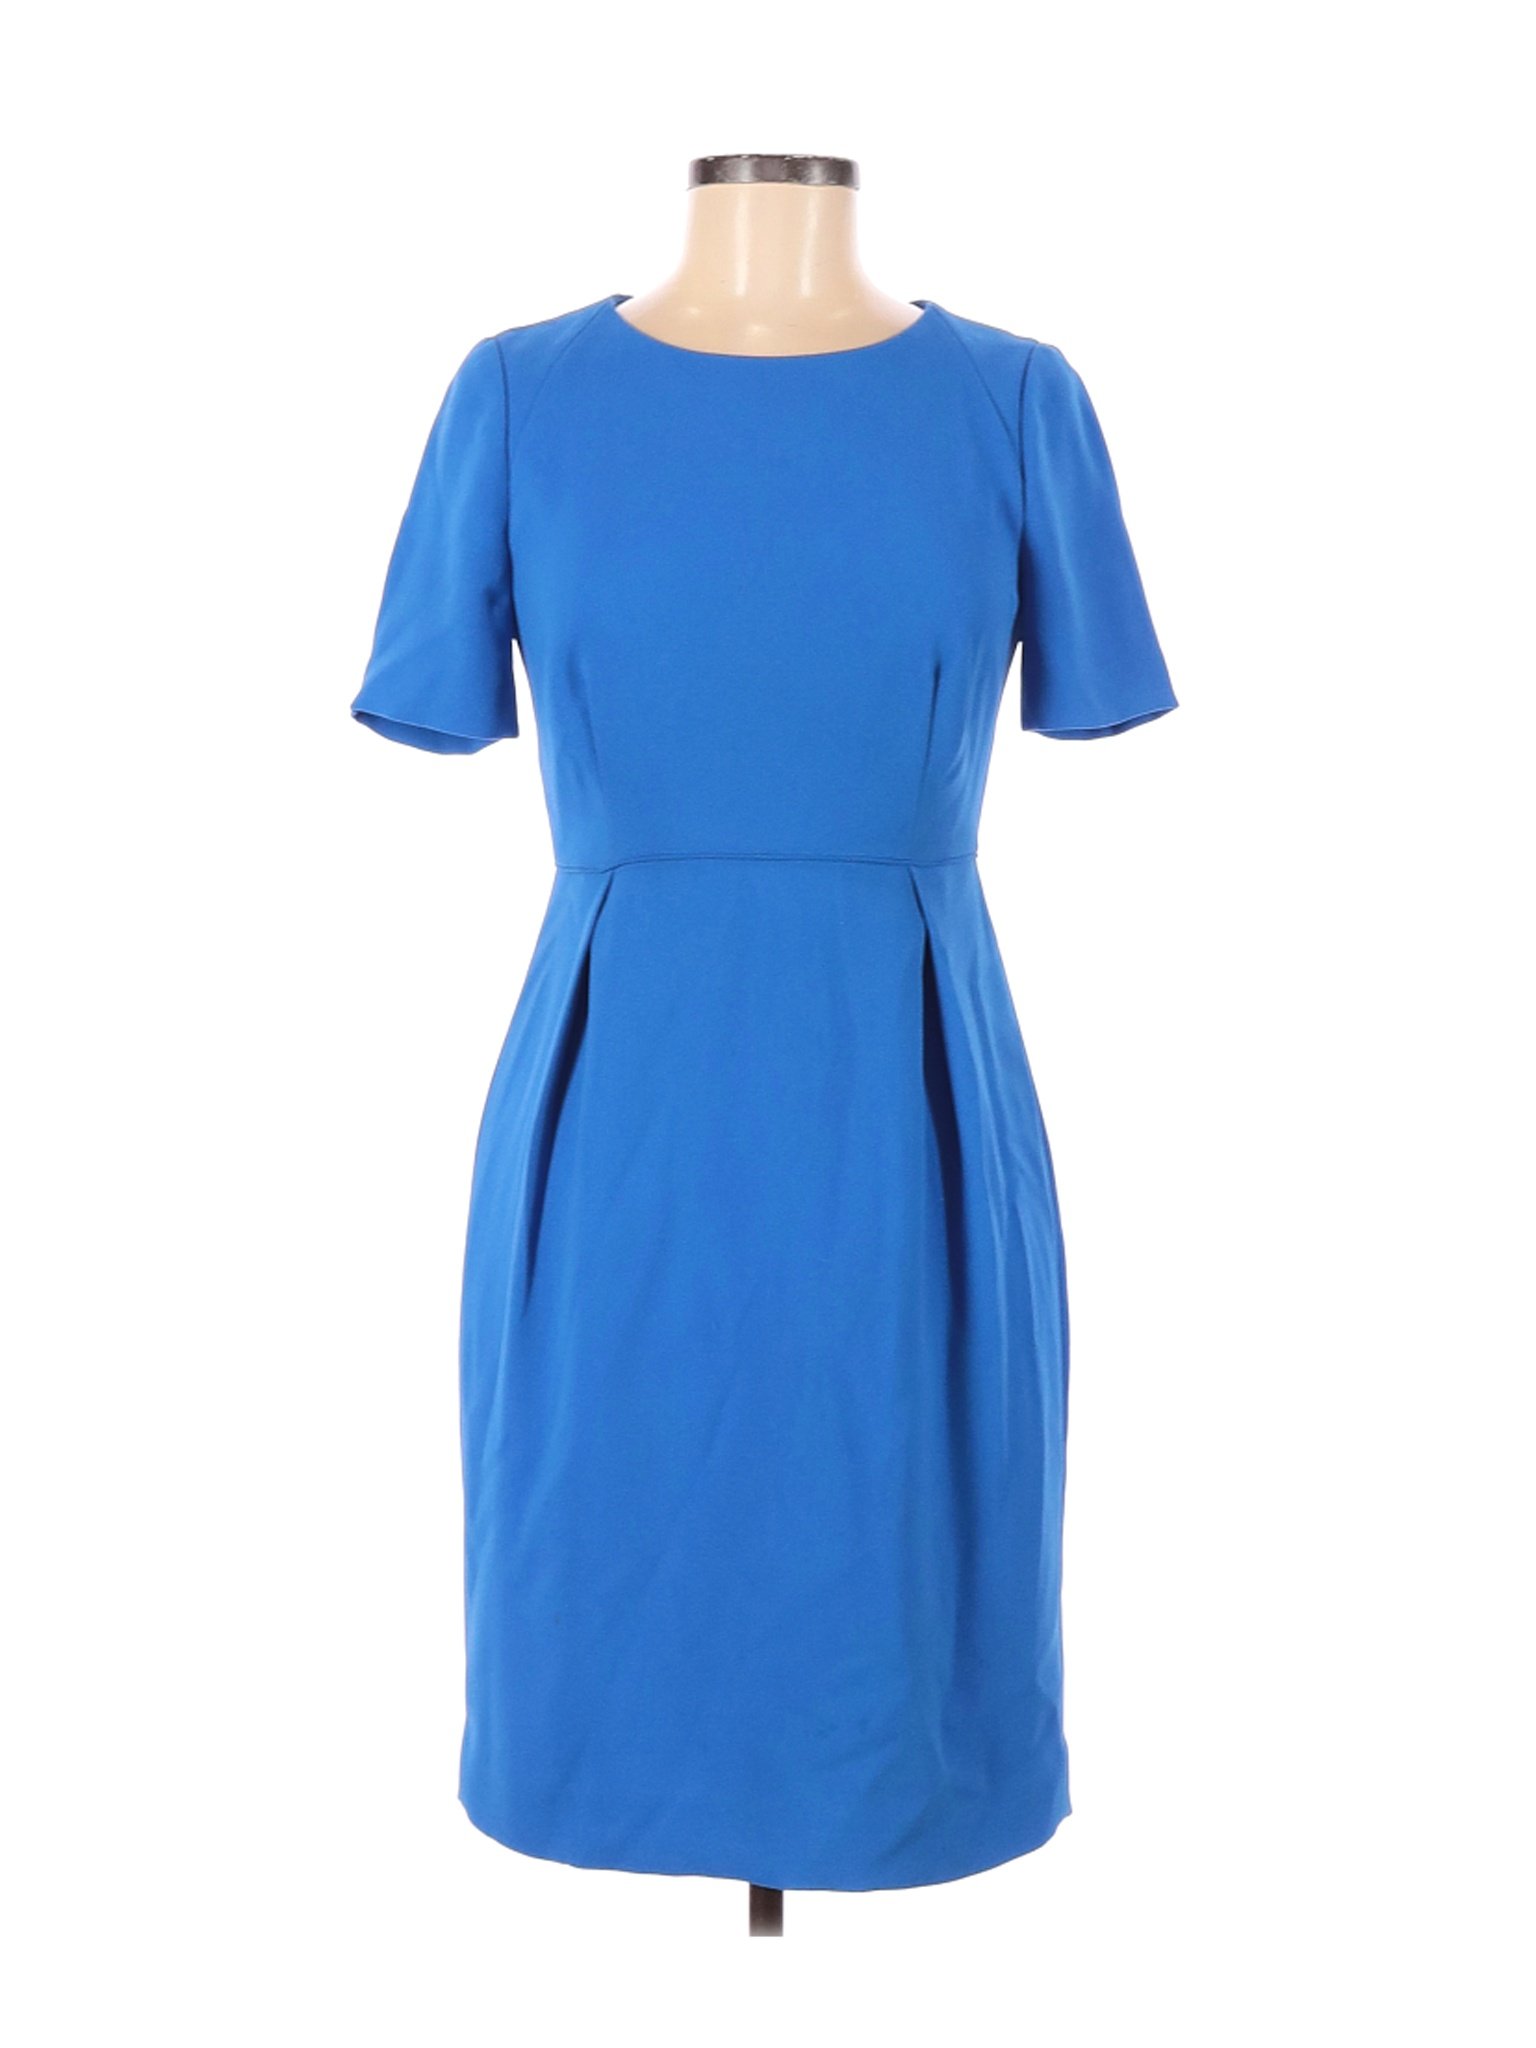 J.Crew Women Blue Casual Dress 2 | eBay